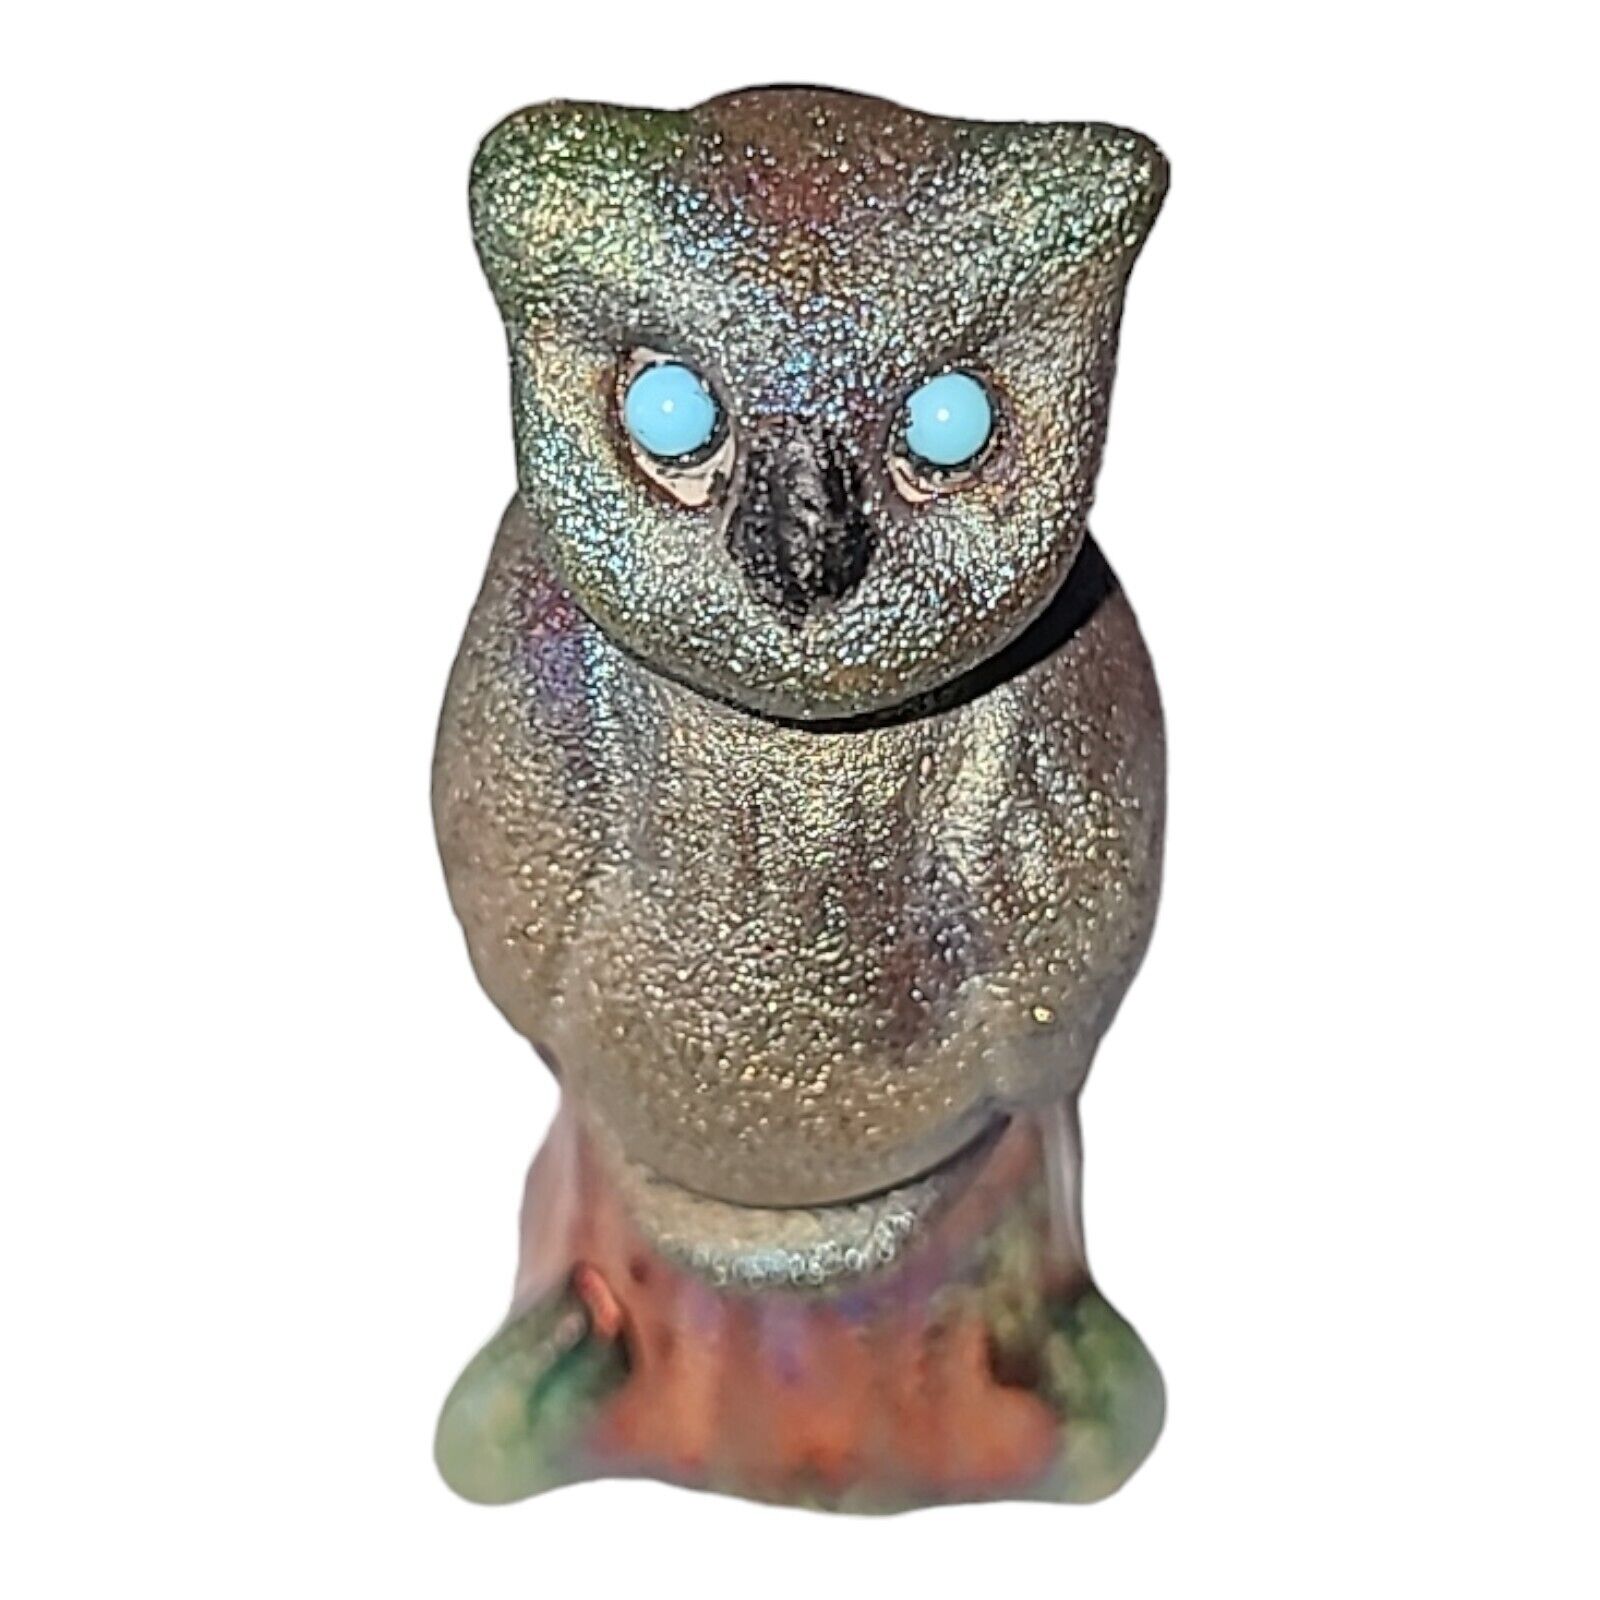 Small Ceramic Owl Figurine